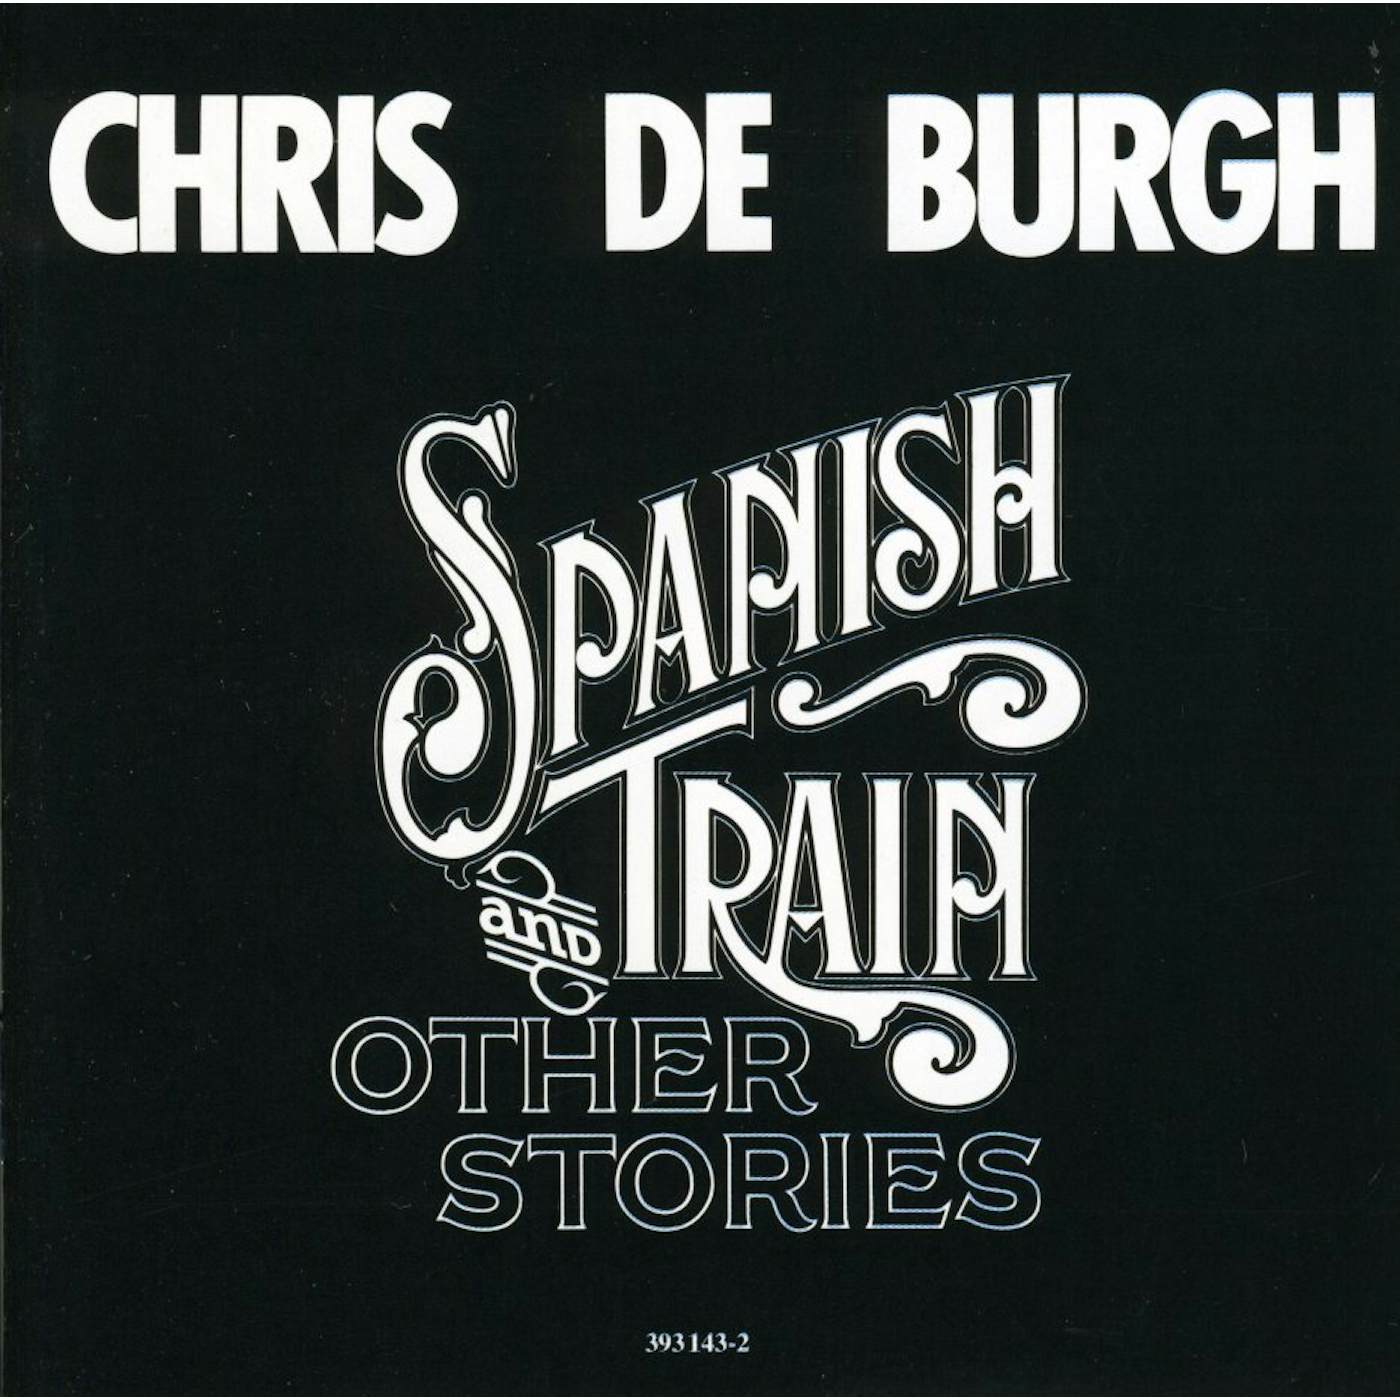 Chris de Burgh SPANISH TRAIN & OTHER STORIES CD